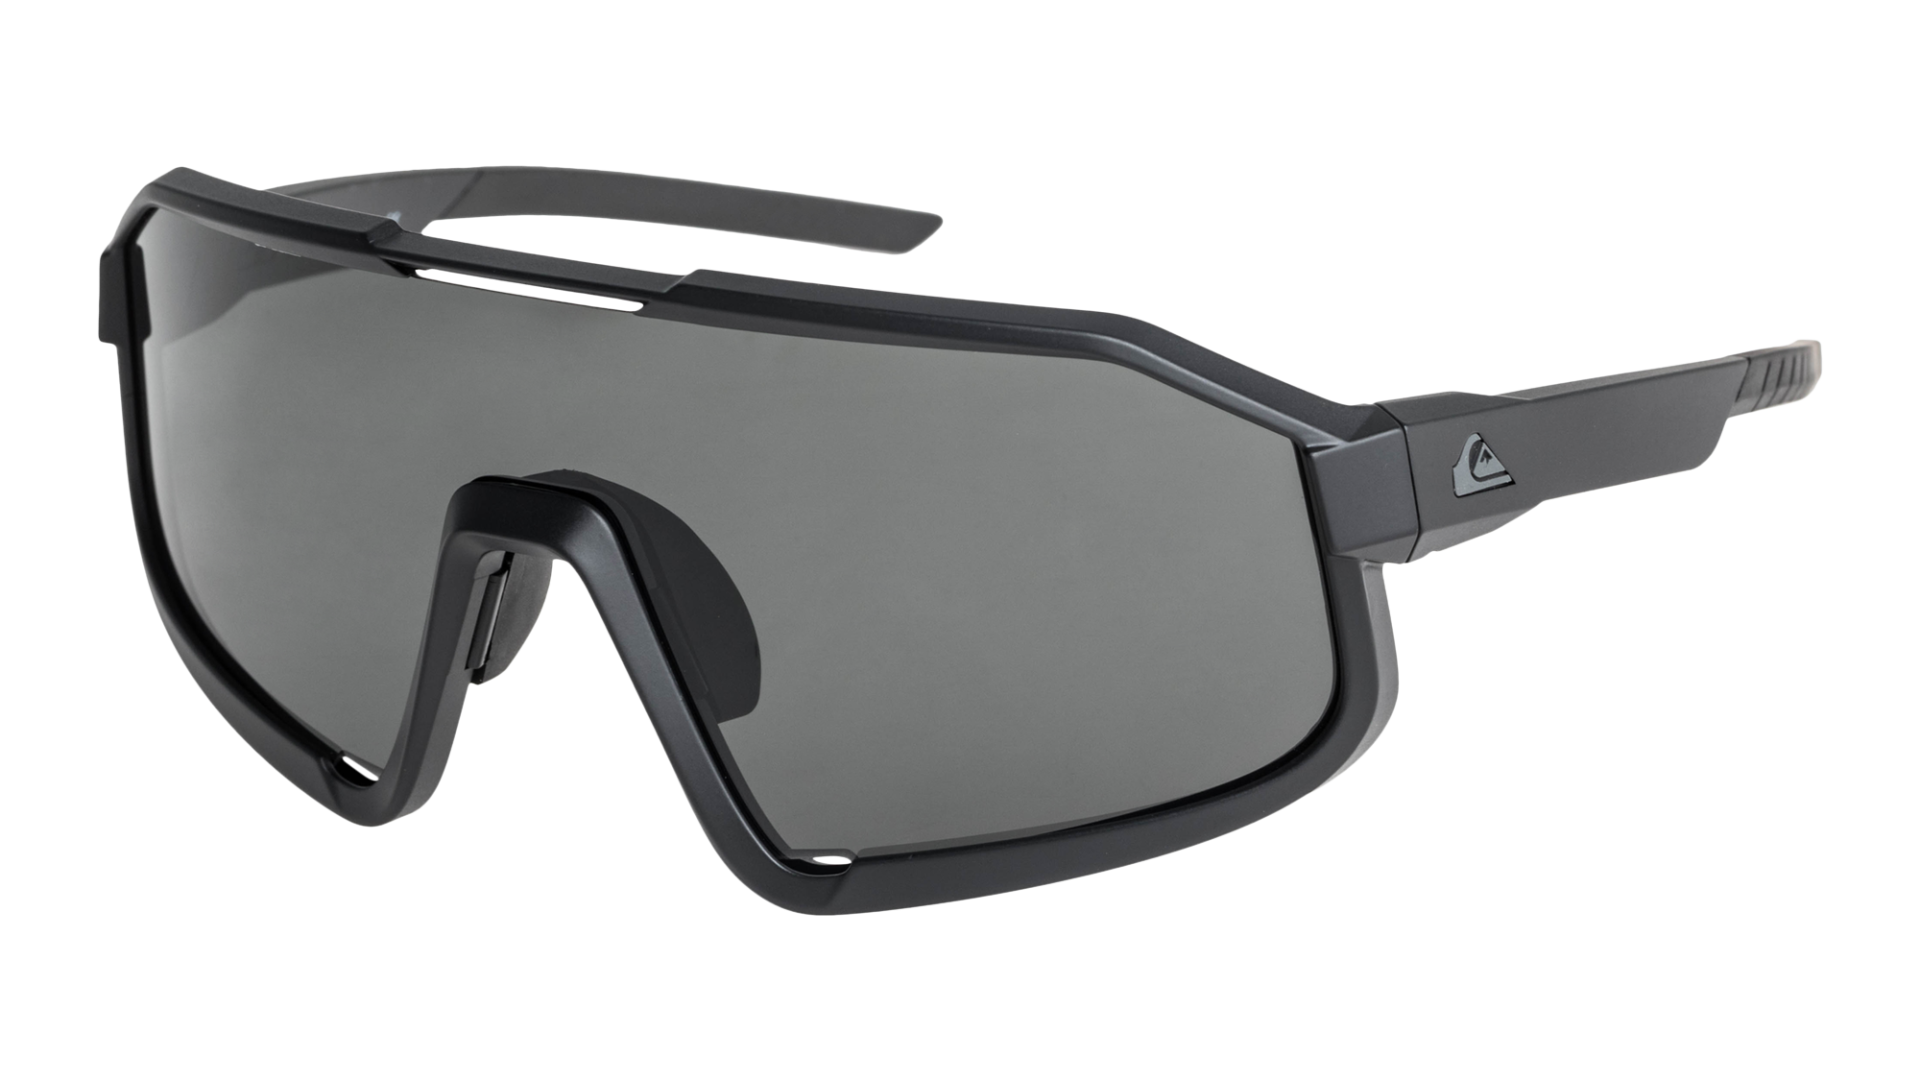 Quiksilver 2023 S/S Sunglasses Preview SOURCE - Boardsport